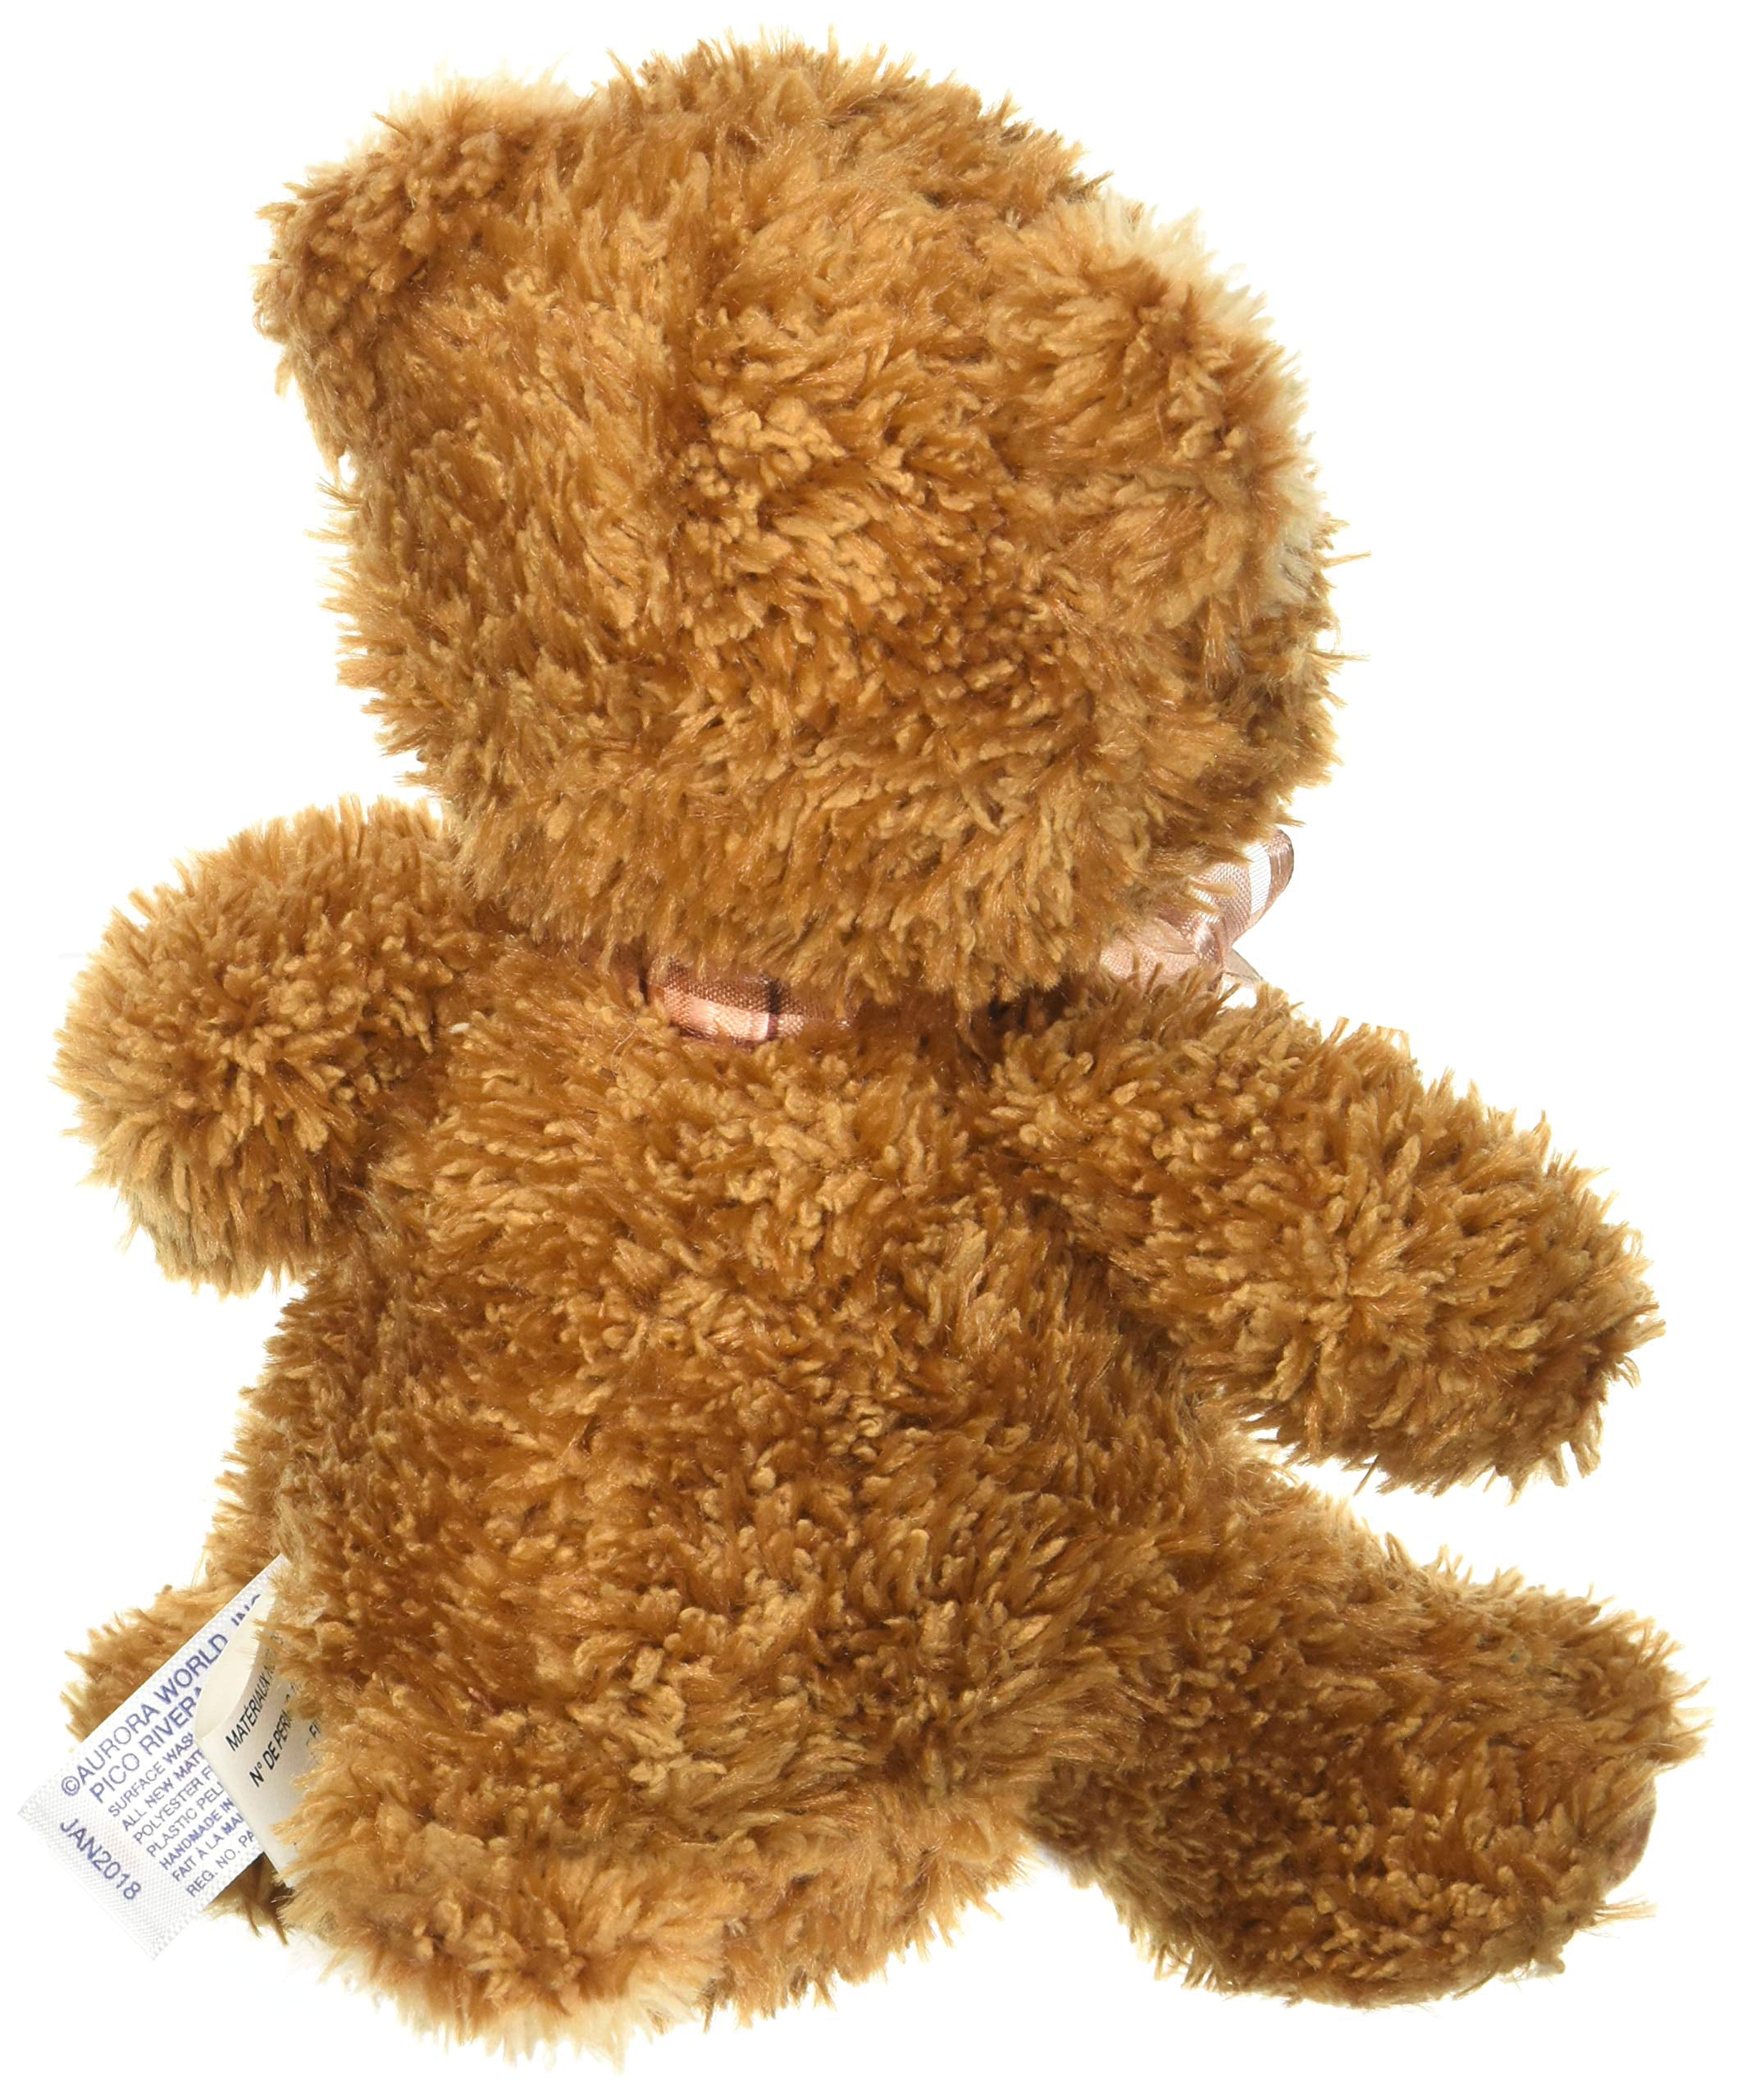 Brown Sugar Bear Stuffed Animal in Hamburg, NY - EXPRESSIONS